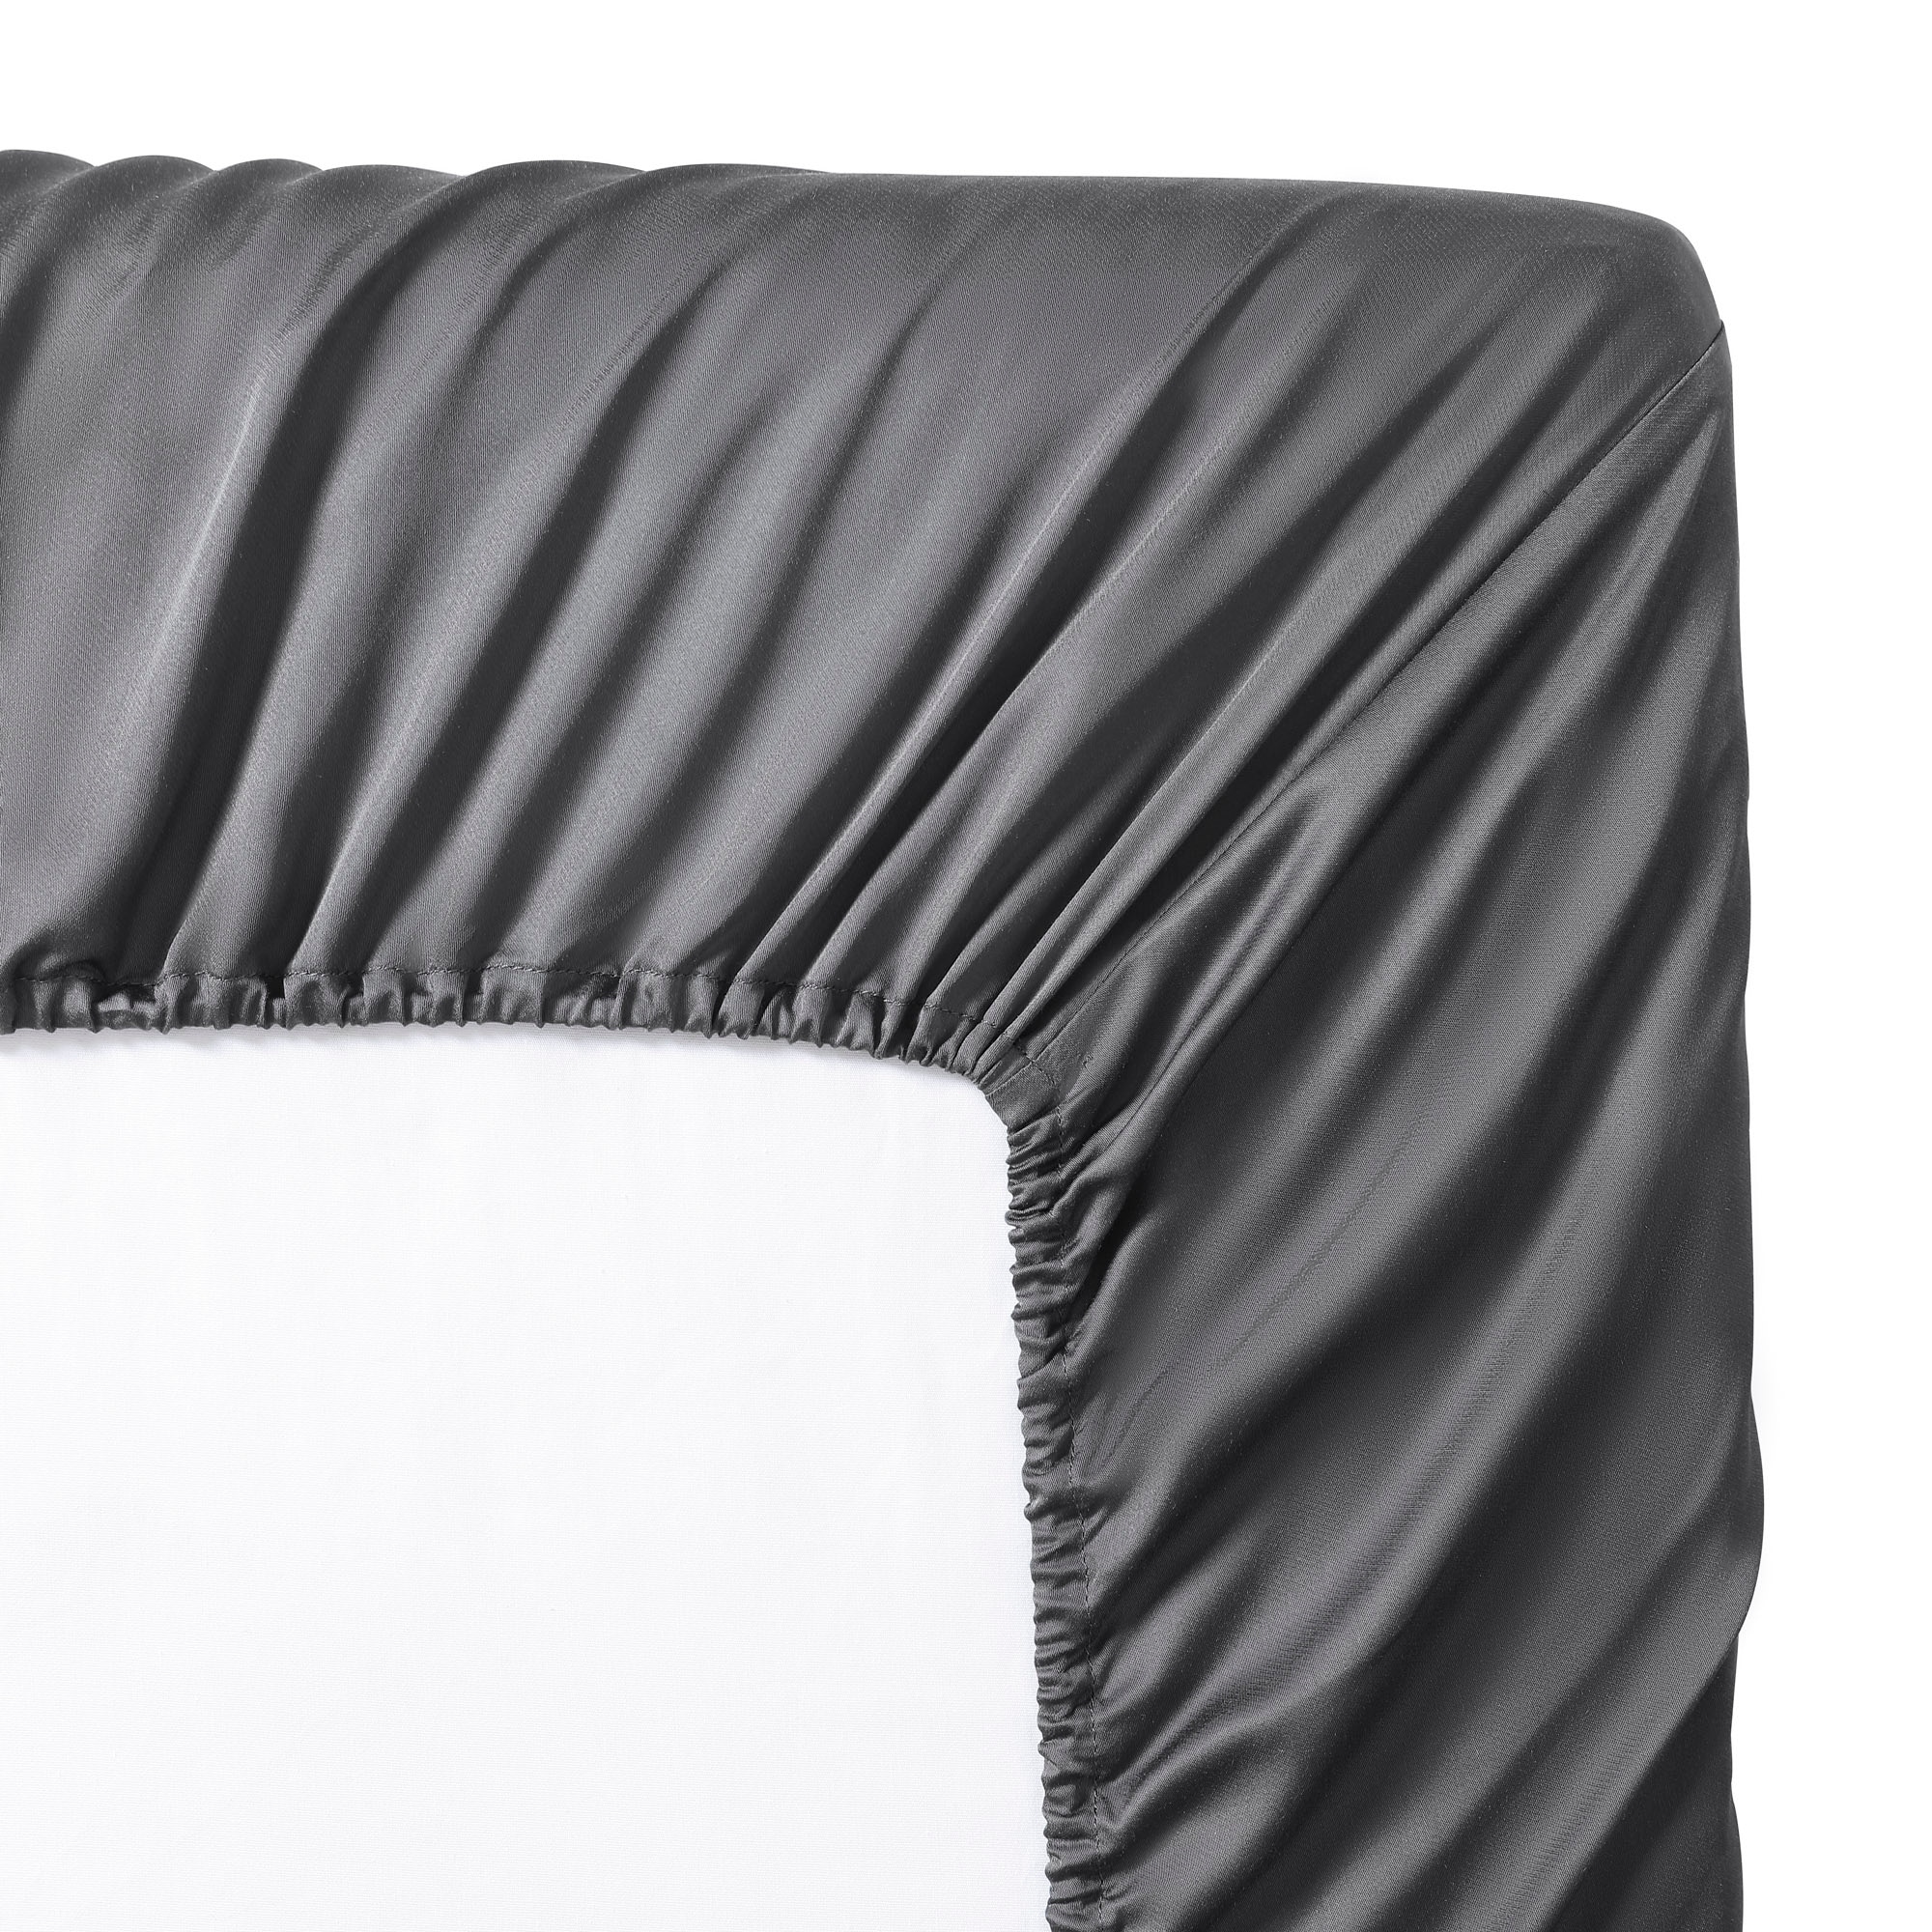 Cooling Beech Tree Fiber-Sheet Set Valeron 100% Tencel Modal Sateen Woven-Luxuriously Soft King Breathable White 